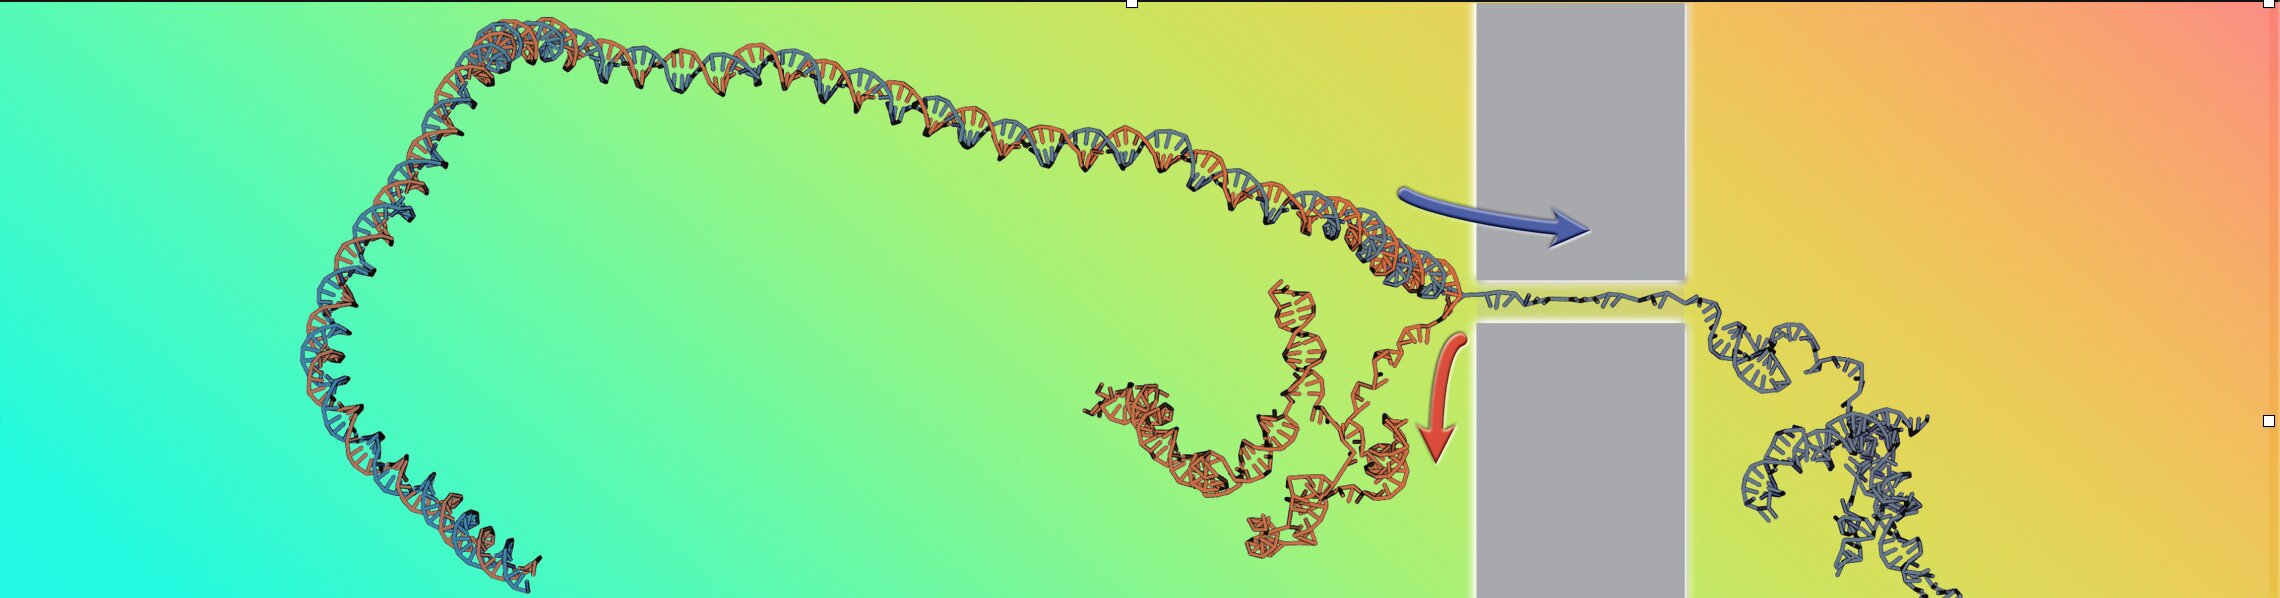 Breaking bonds: Double-helix unzipping reveals DNA physics - computer technology news - Technology - Public News Time